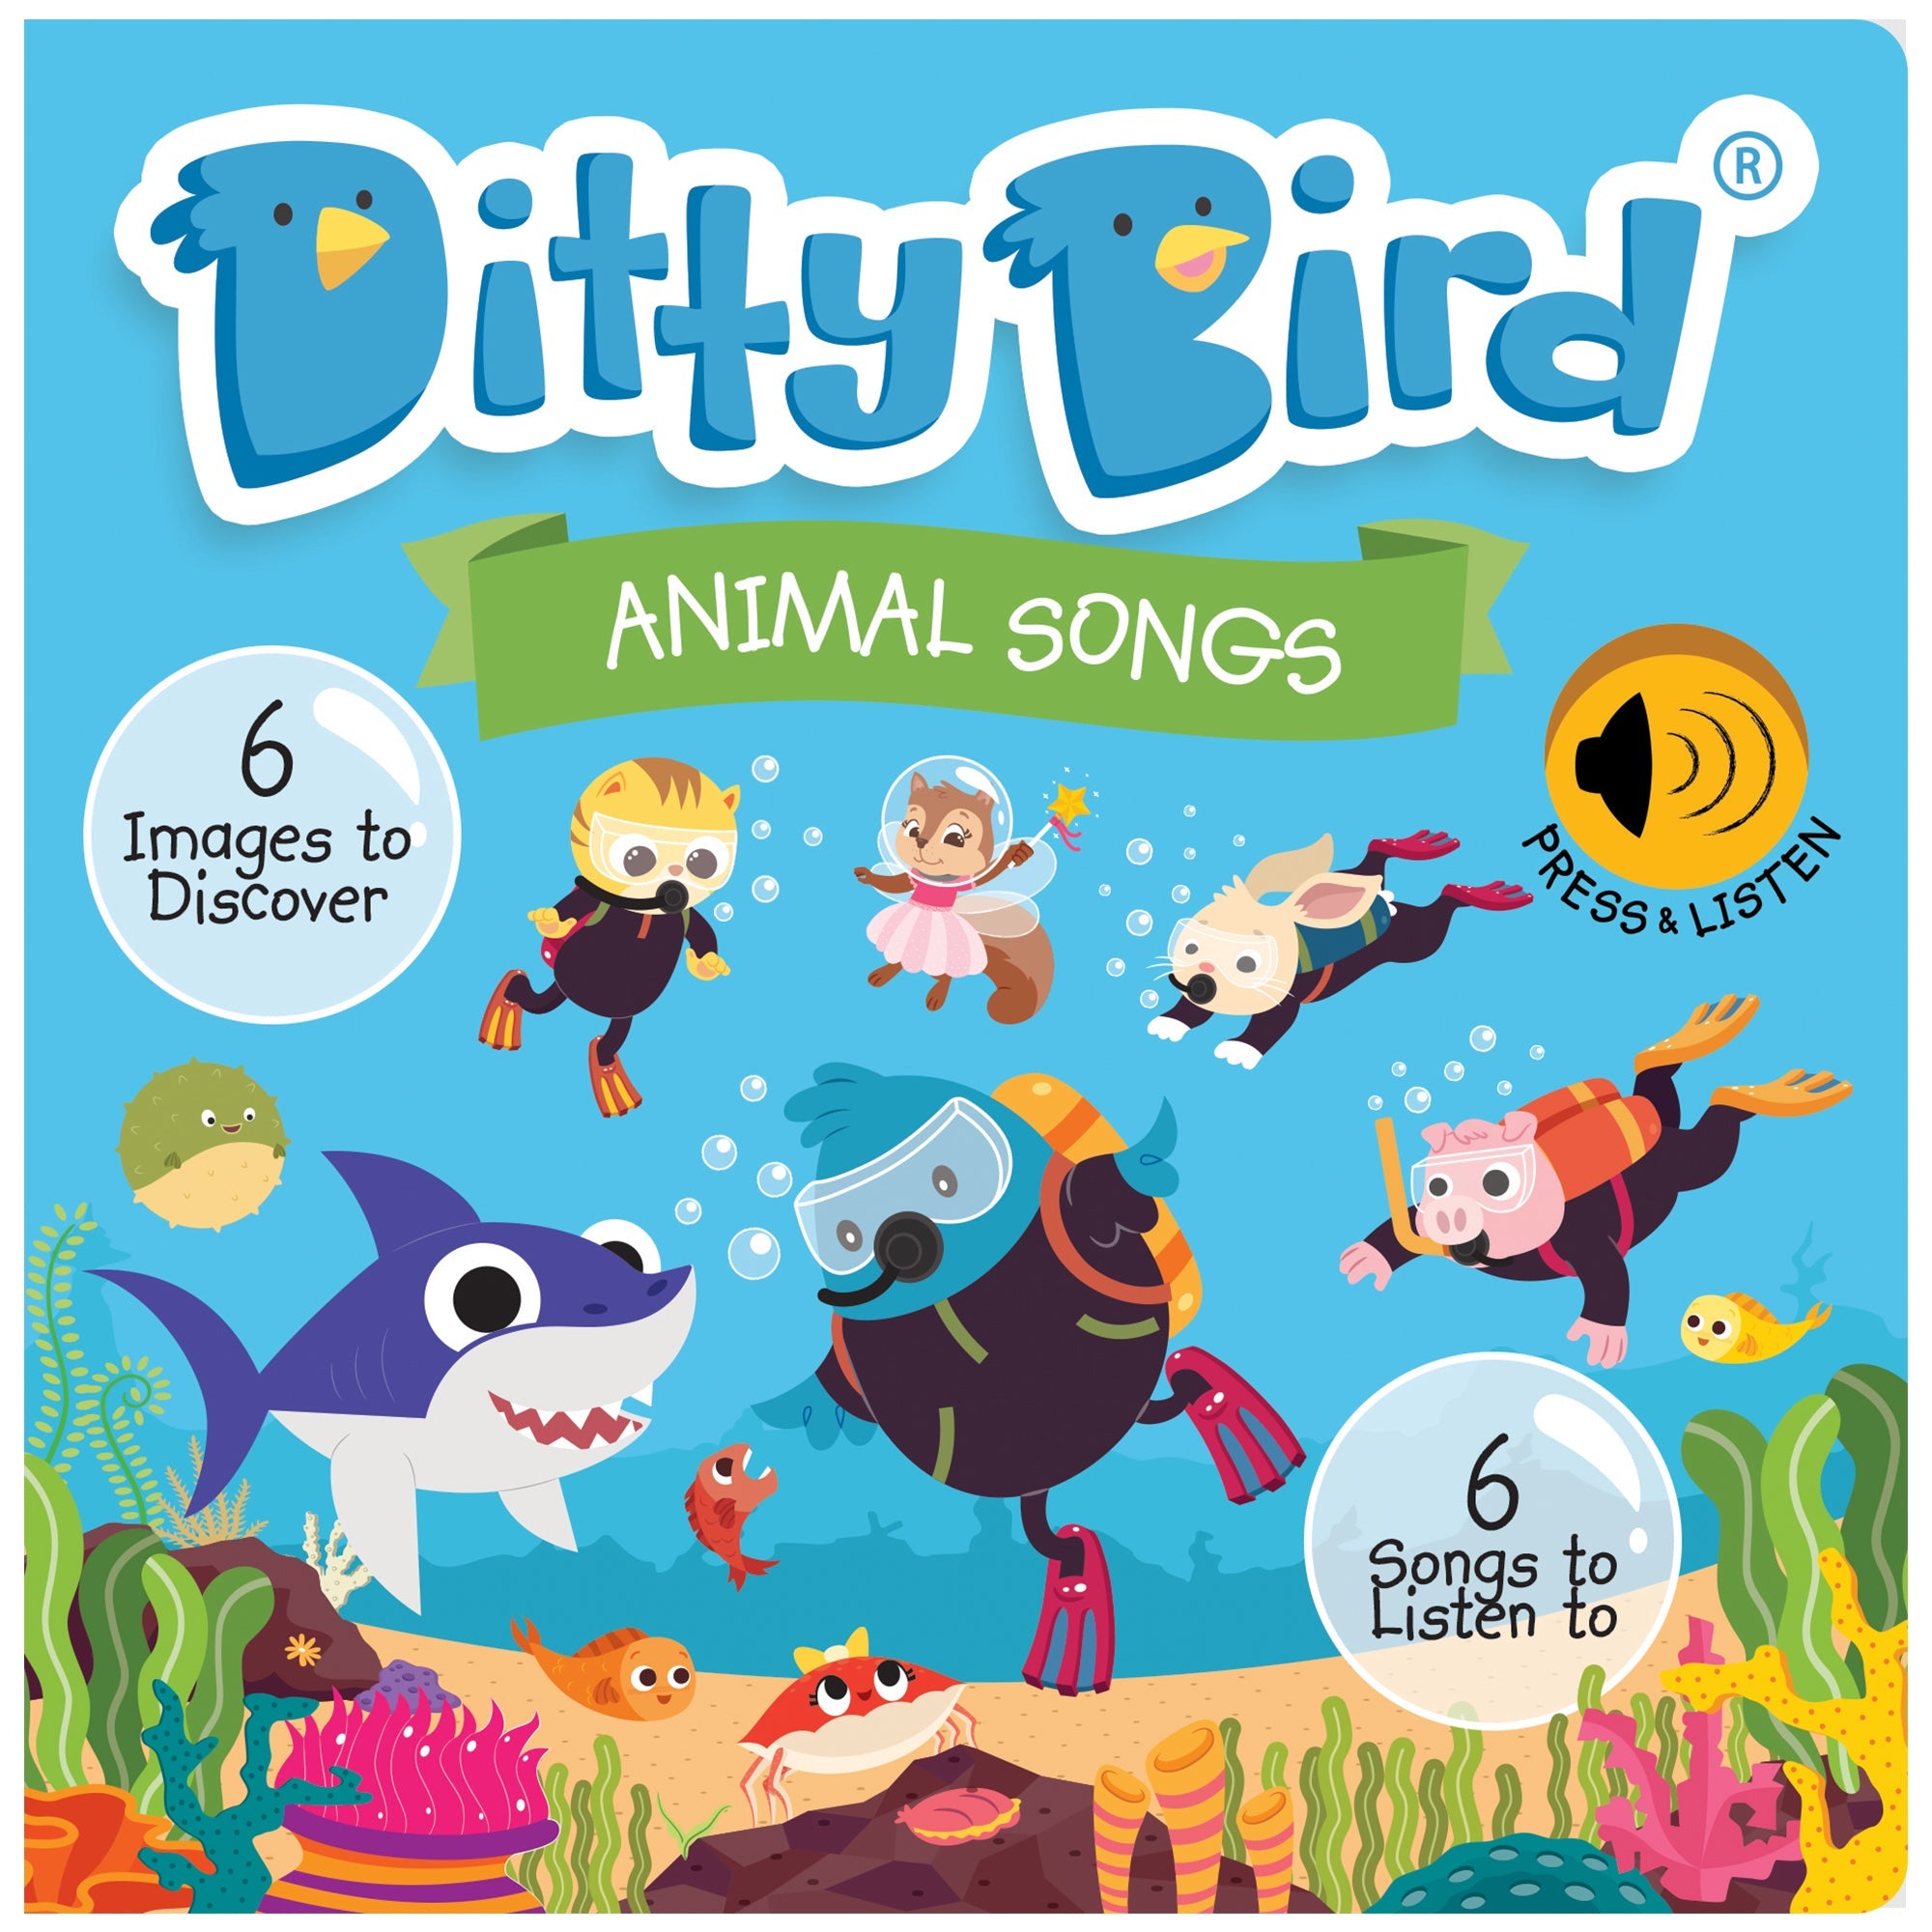 Ditty Bird - Animal Songs - HoneyBug 